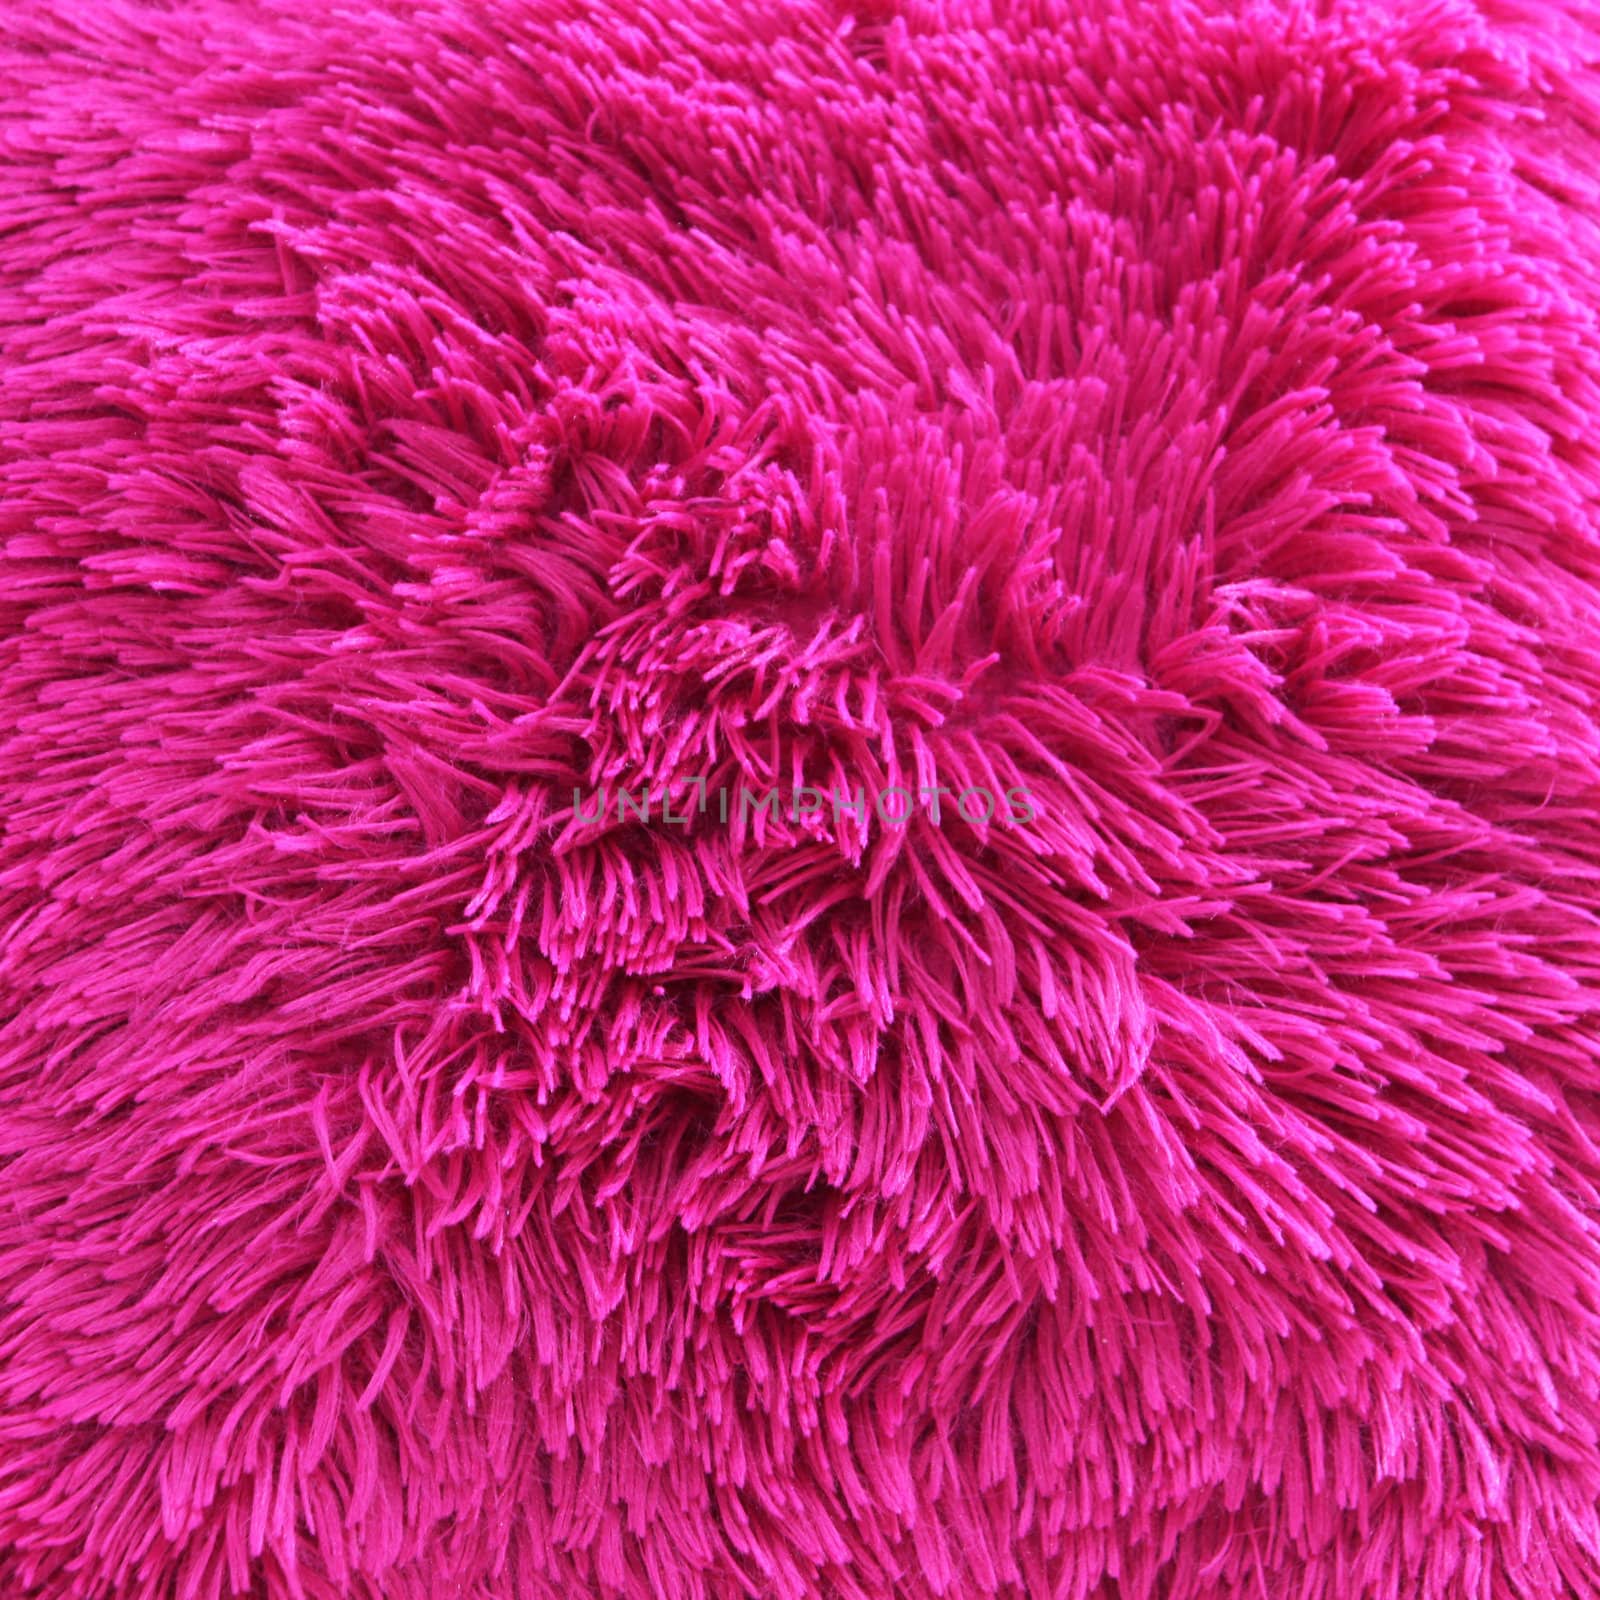 Vivid pink shaggy carpet pile by Farina6000